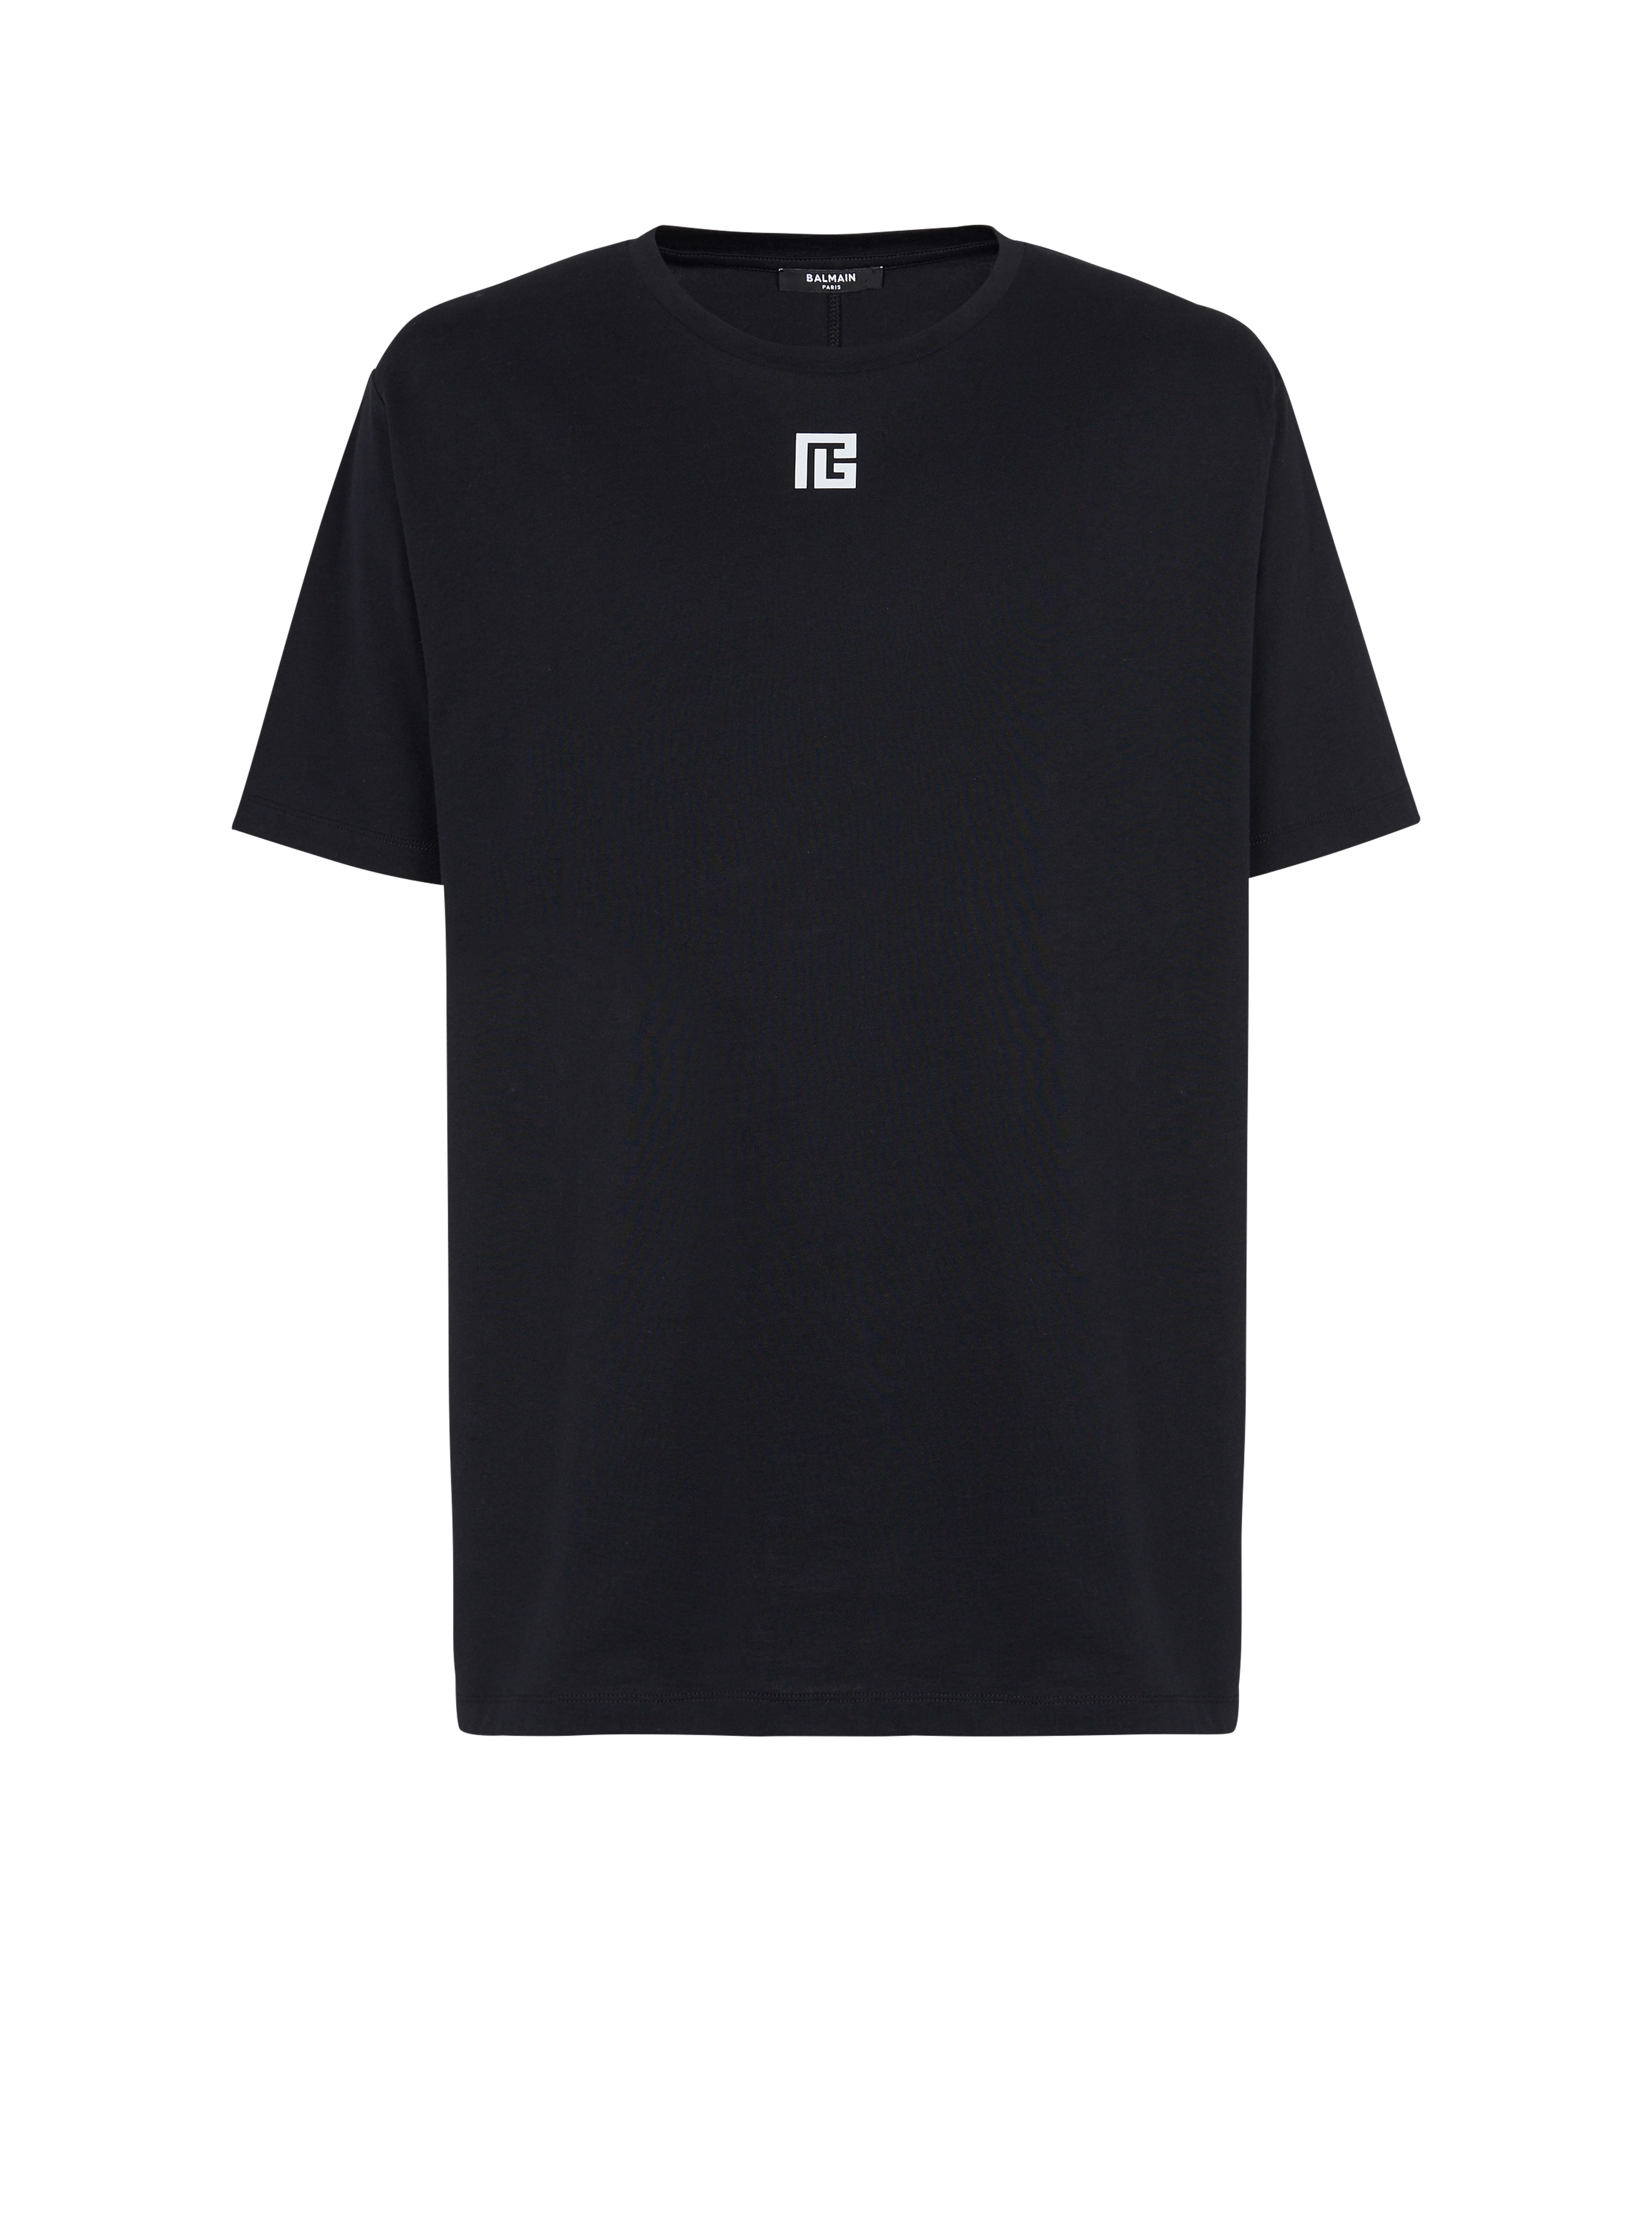 Balmain巴尔曼大型反光标志印花环保设计棉质T恤, black